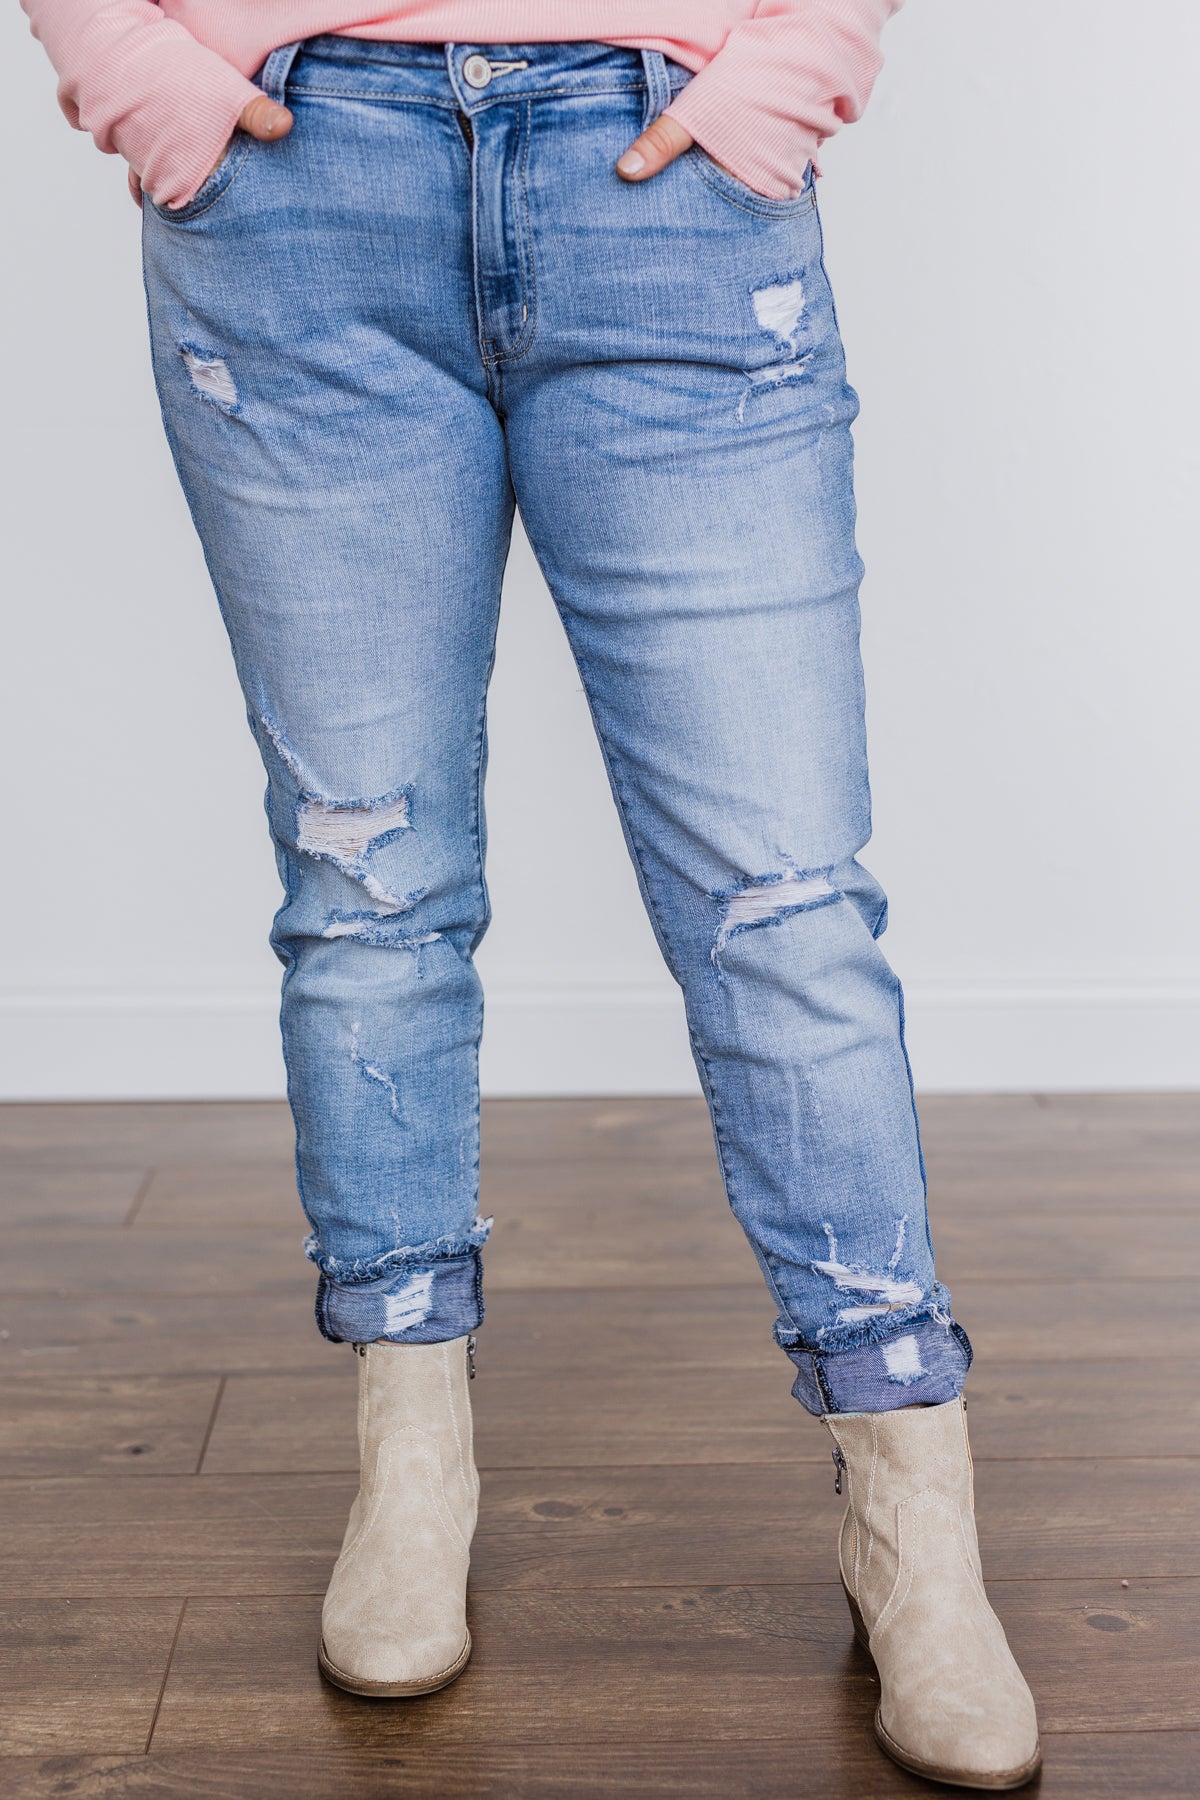 KanCan Distressed Skinny Jeans- Bonnie Wash